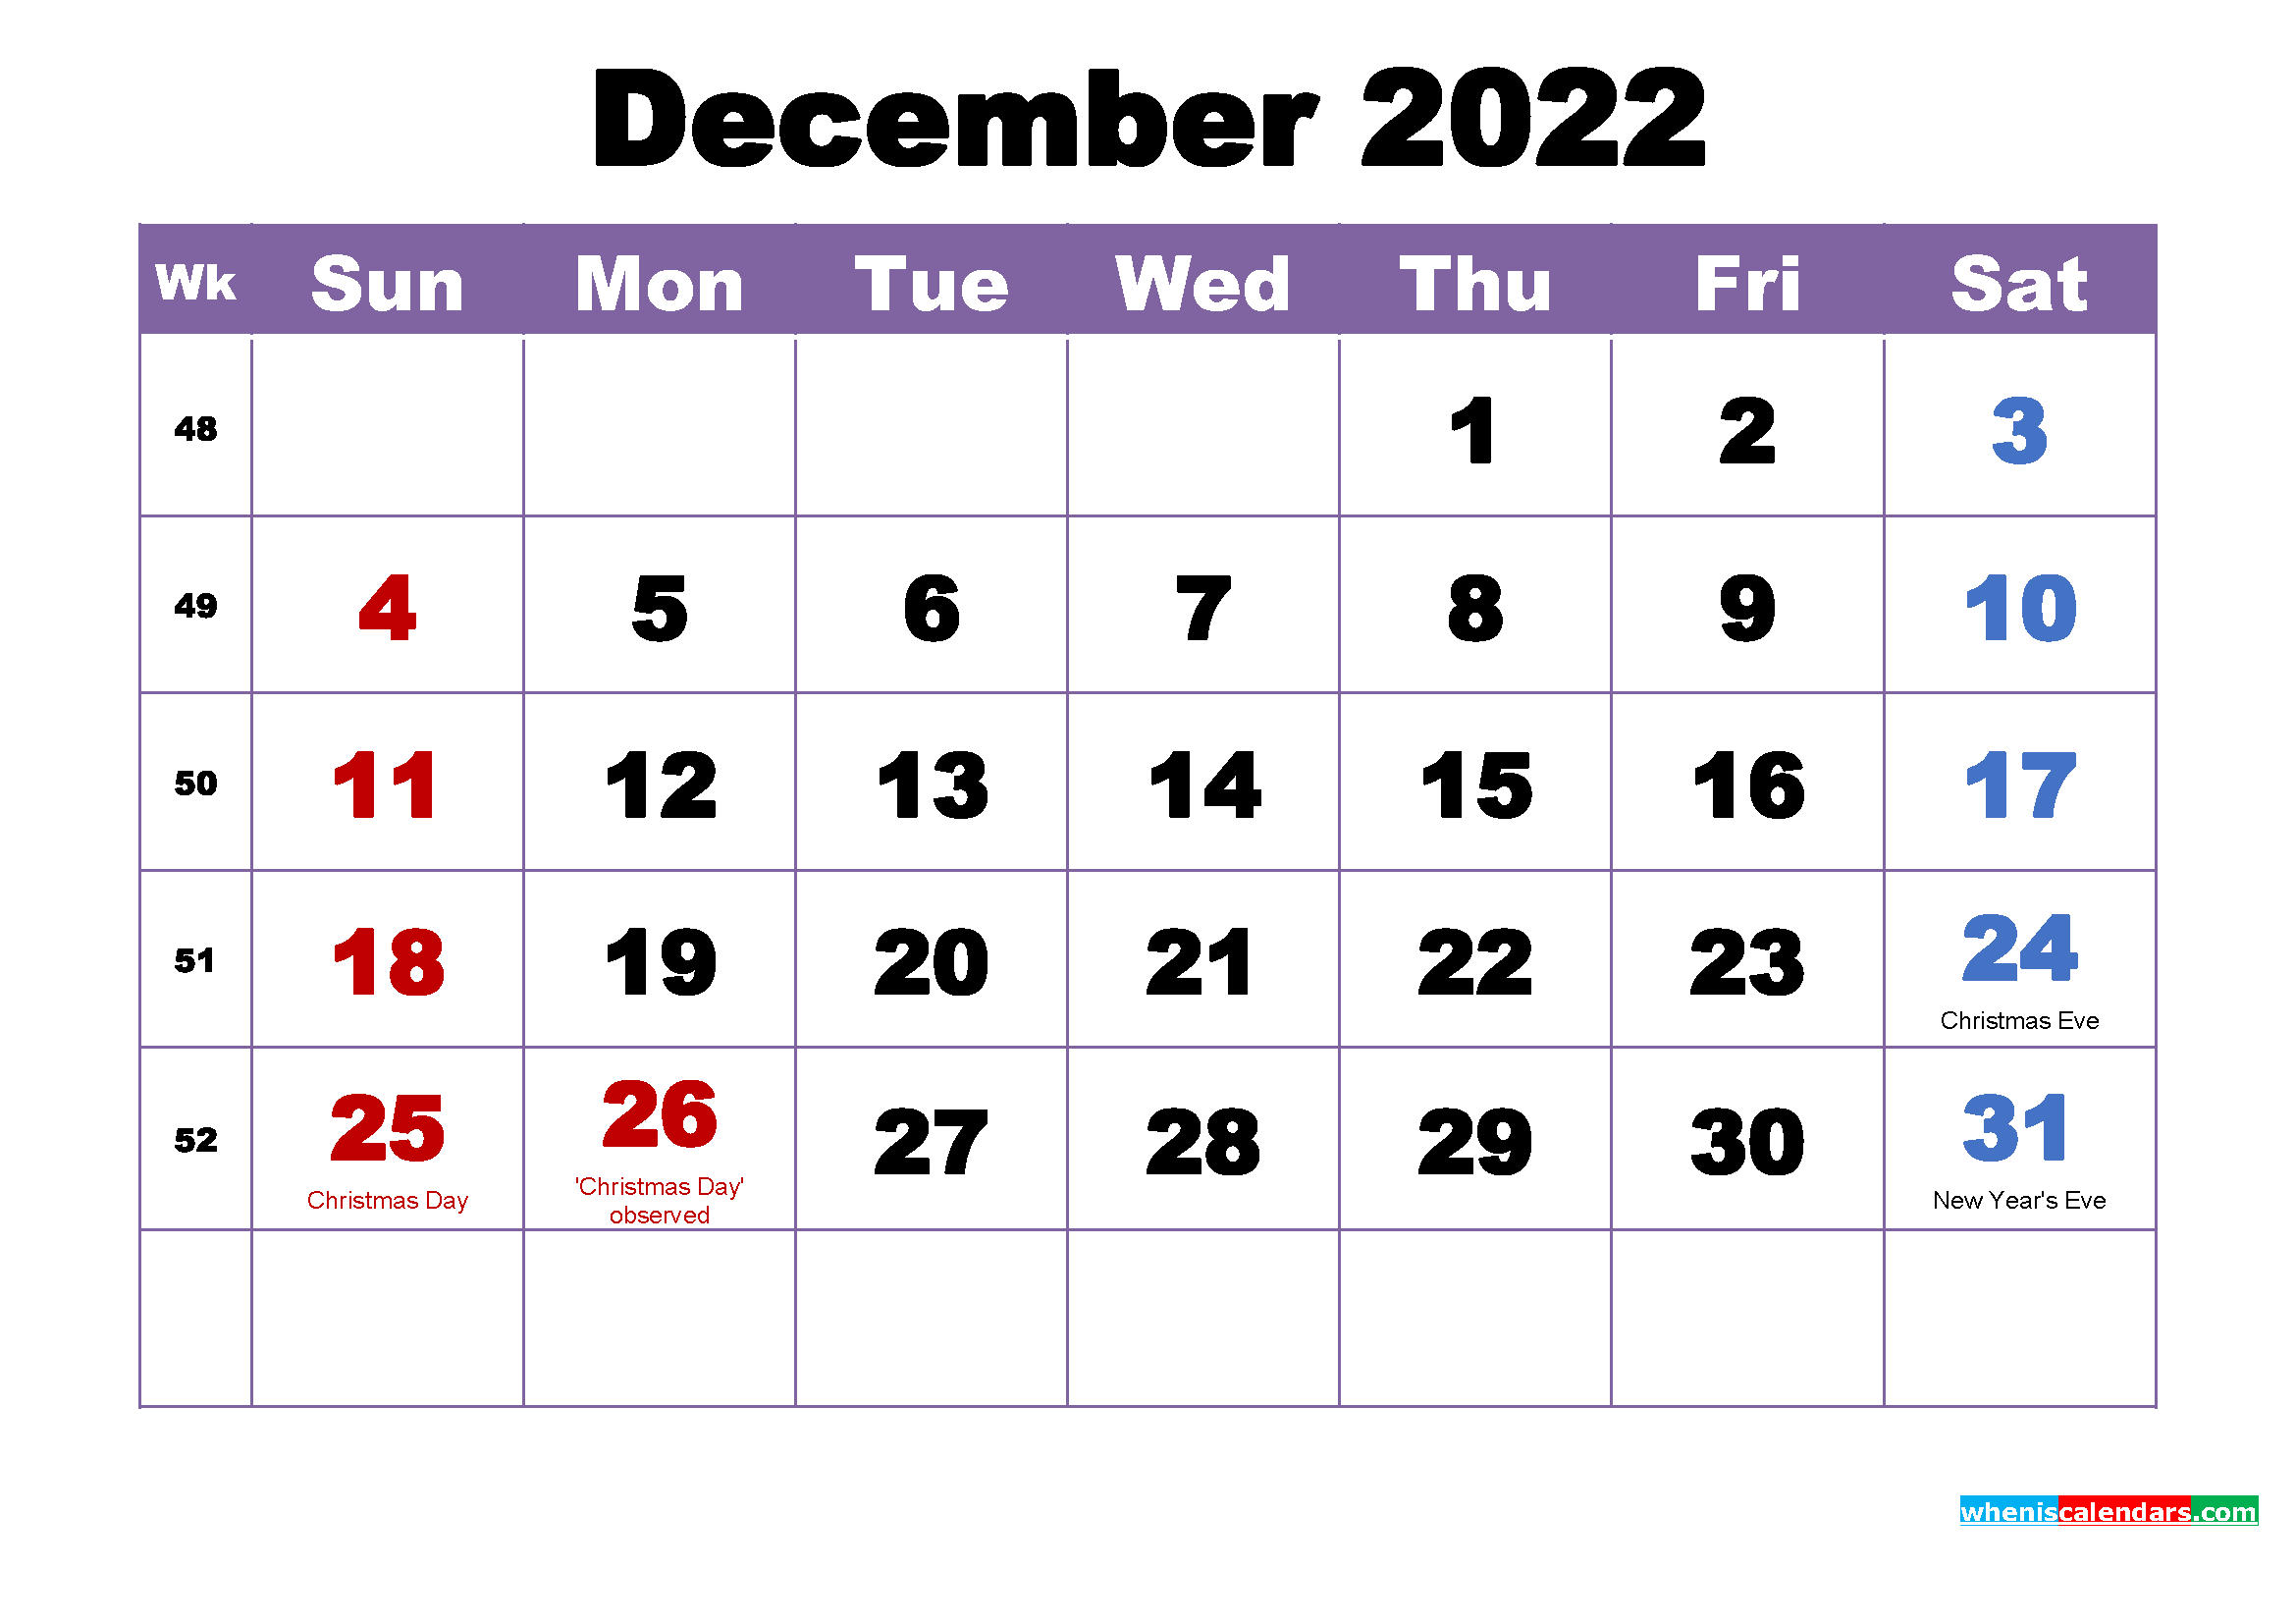 Dec 2022 Calendar With Holidays Free December 2022 Calendar With Holidays Printable